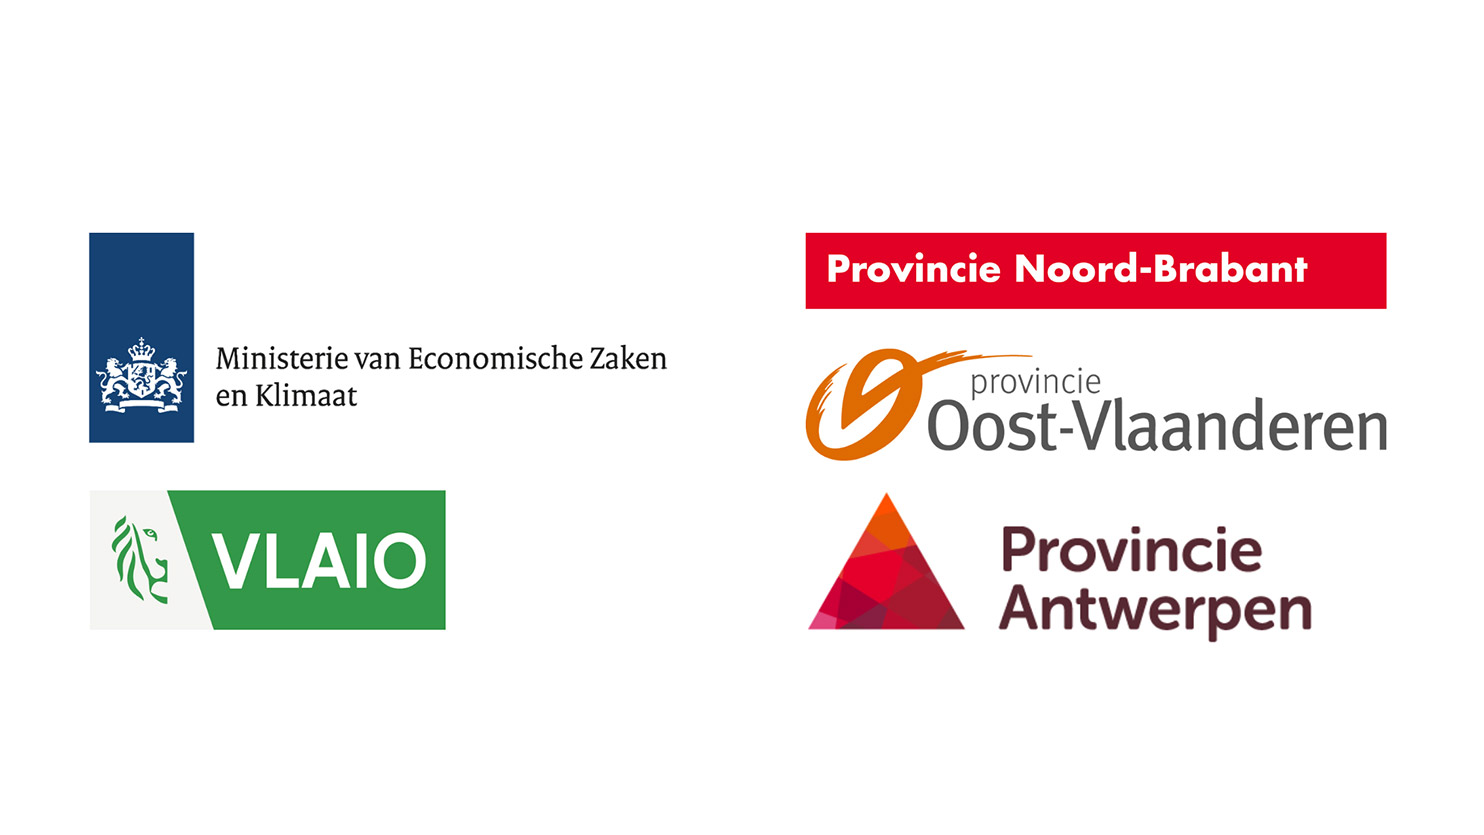 Logo's co-funders of the Interreg Flanders-Netherlands cooperation program